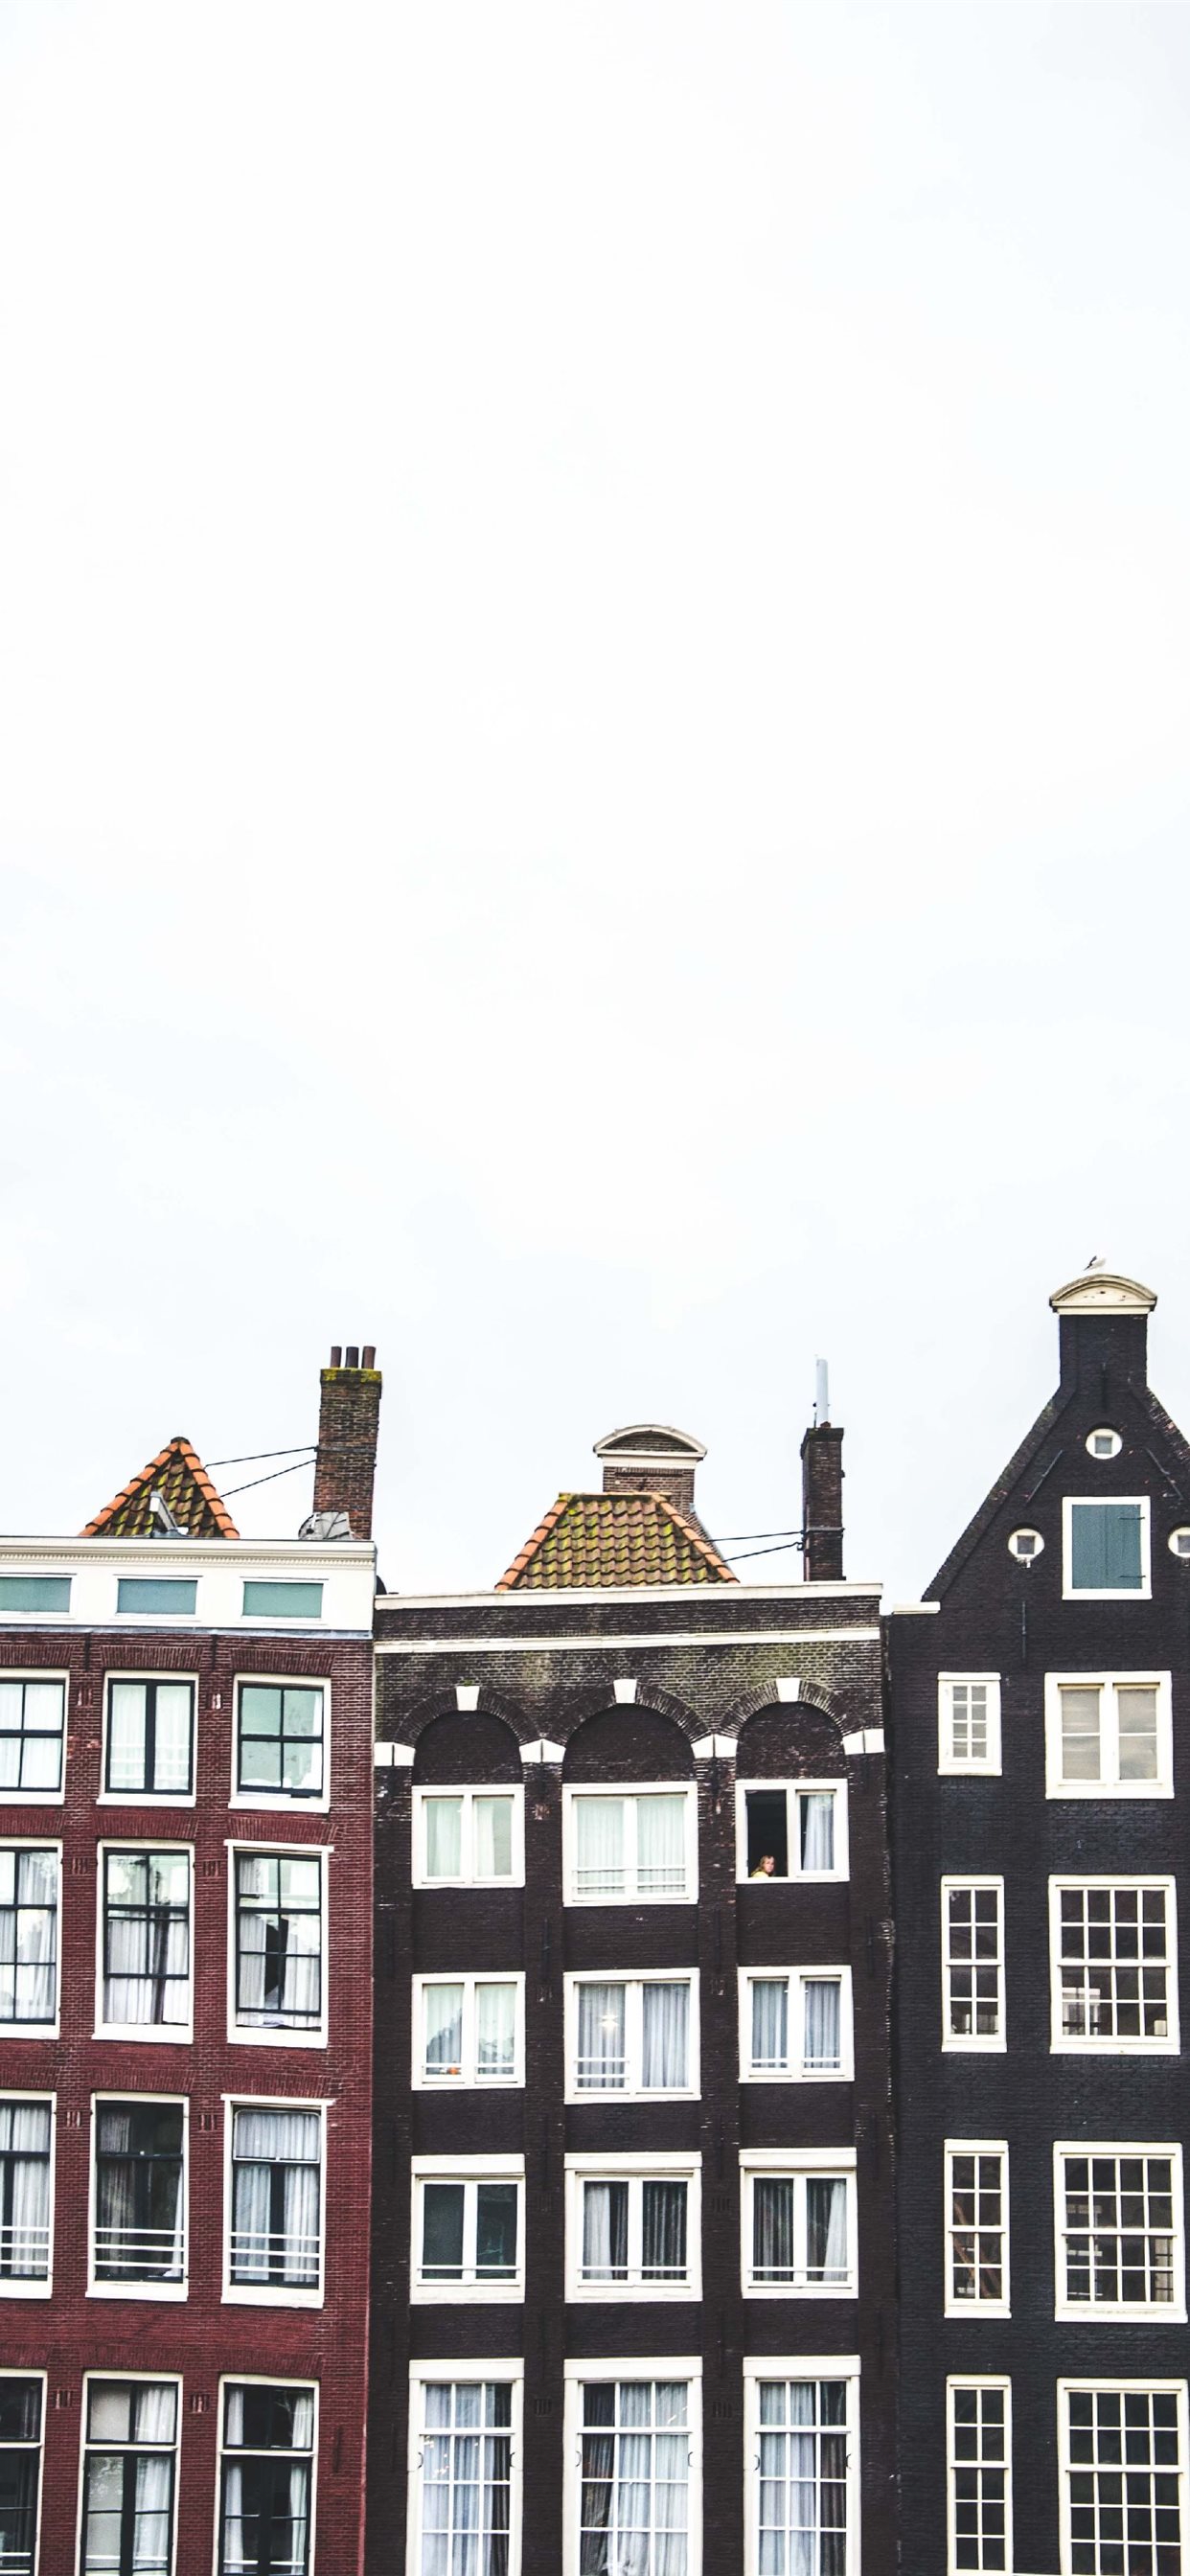 Netherlands Amsterdam Van Der Valk Hotel for 3 nig... iPhone X Wallpapers  Free Download